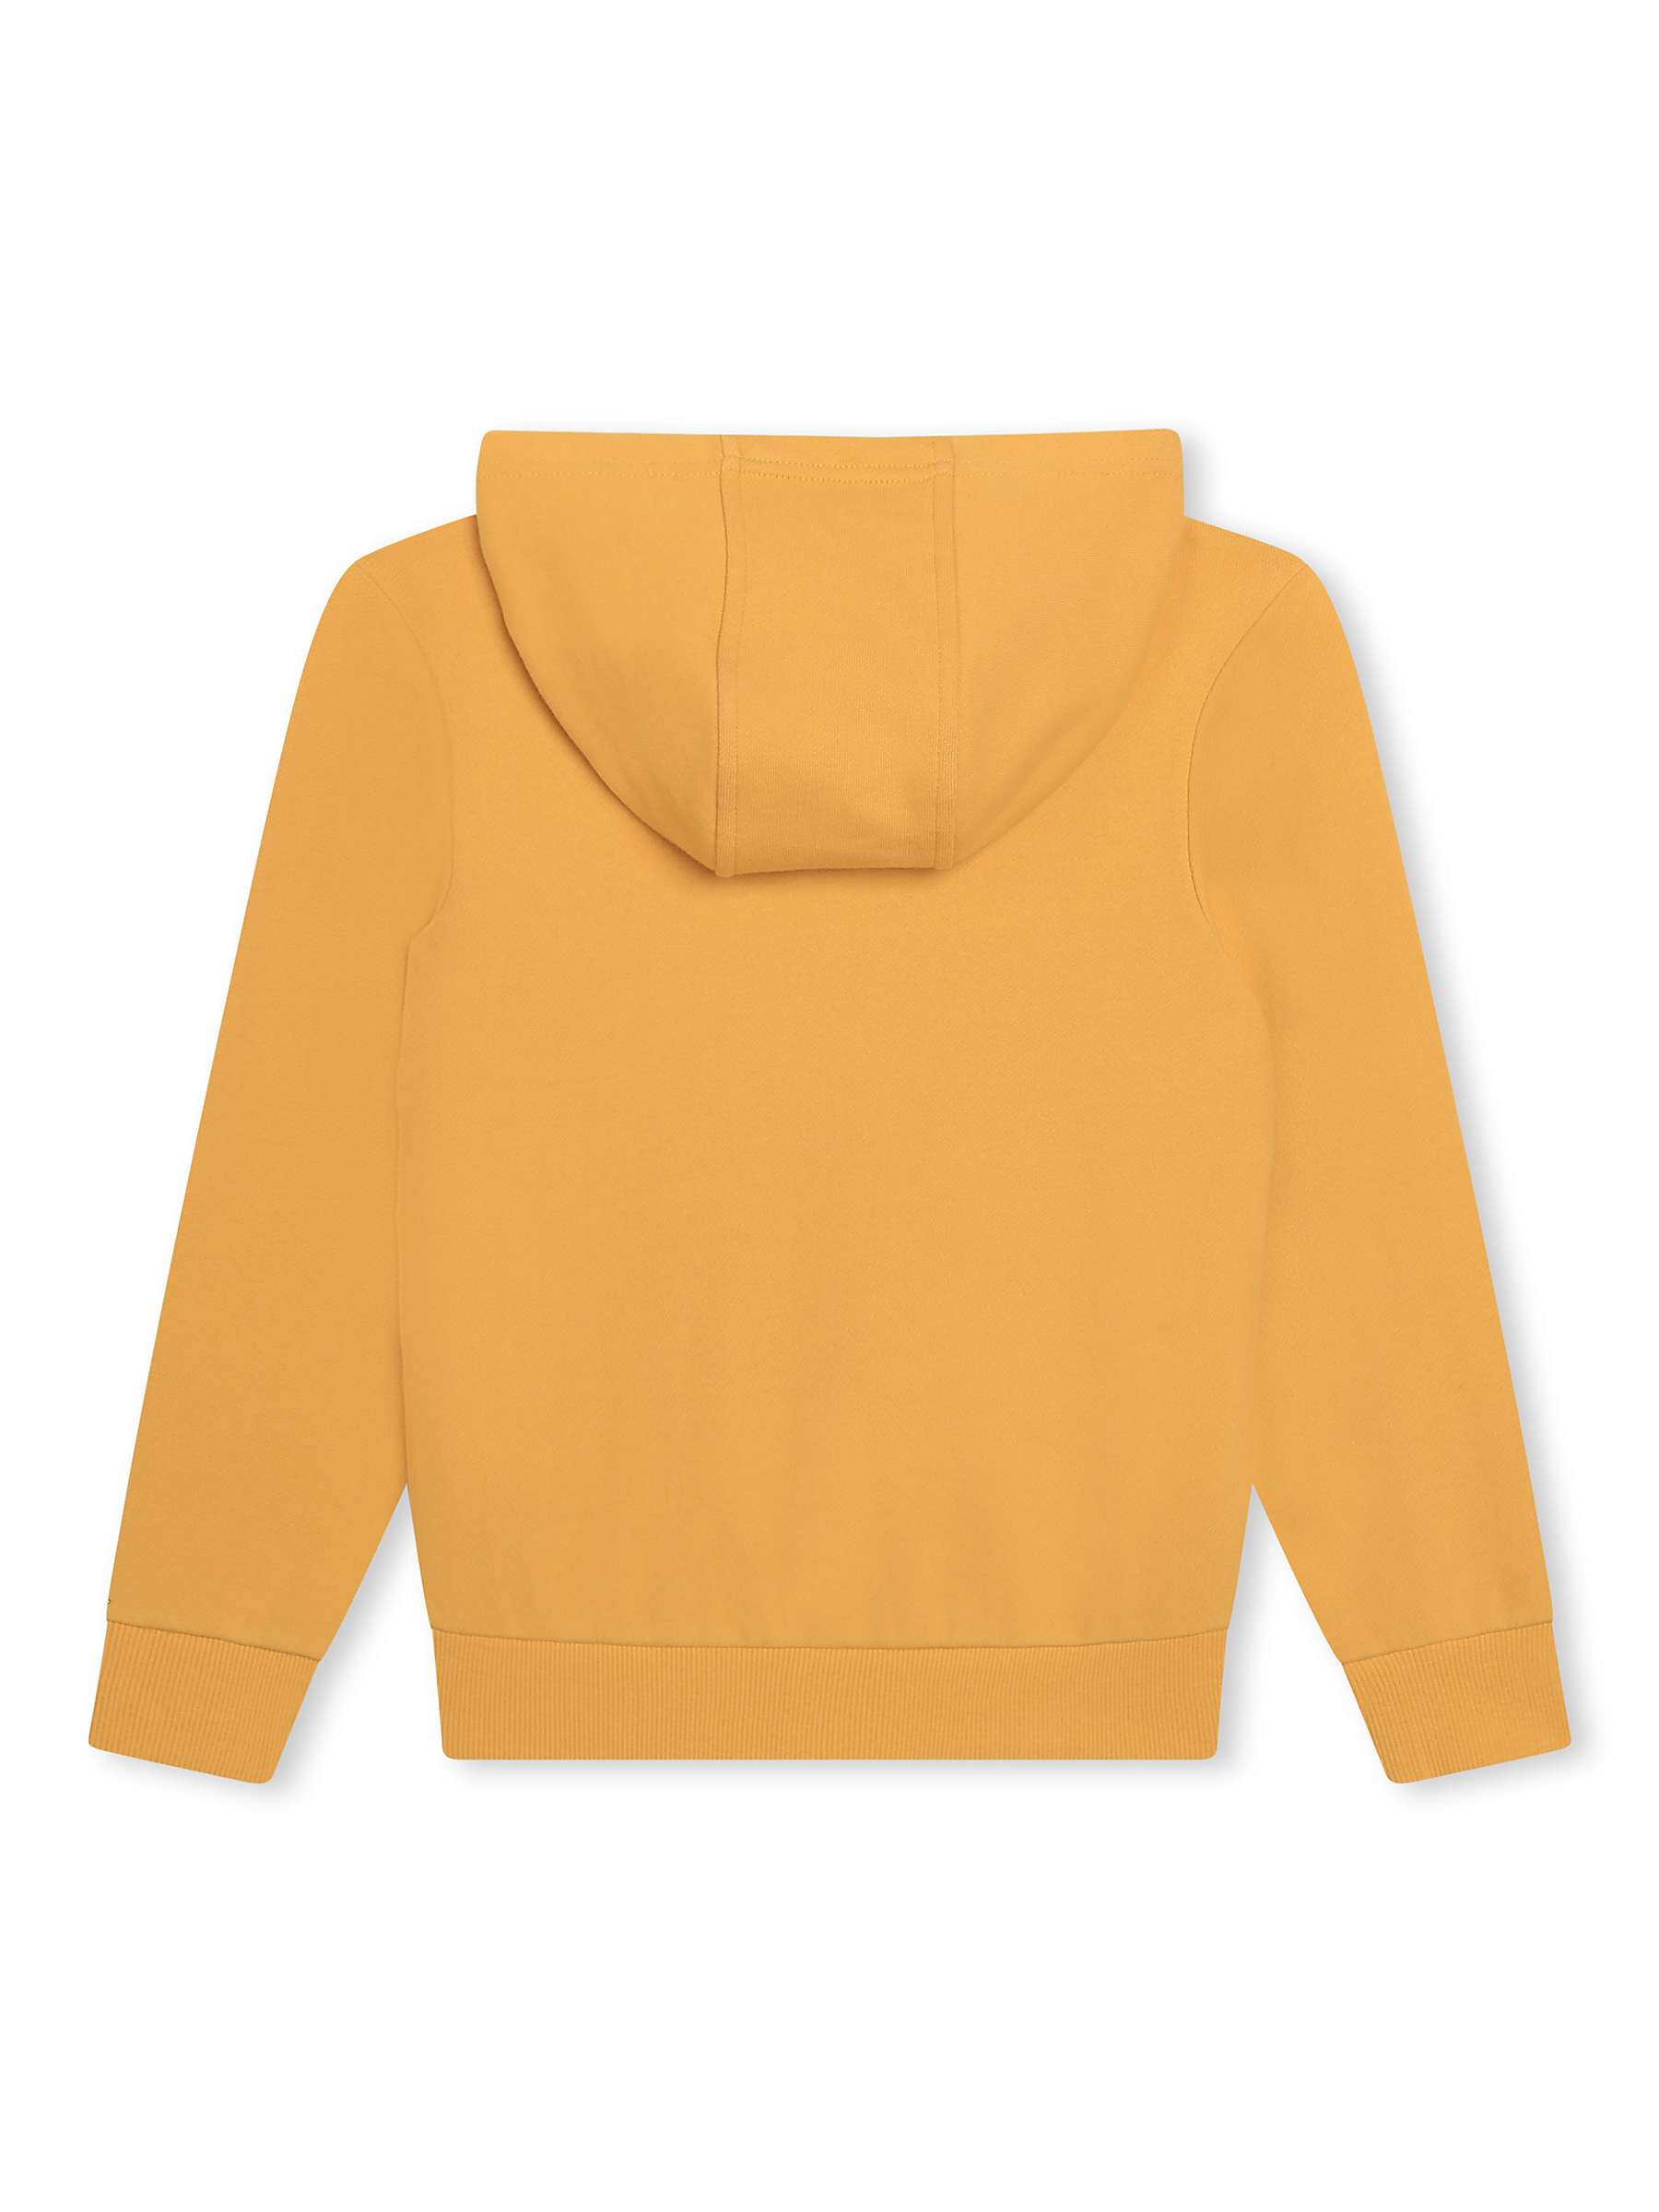 Buy Timberland Kids' Logo Hooded Sweatshirt, Yellow/Multi Online at johnlewis.com